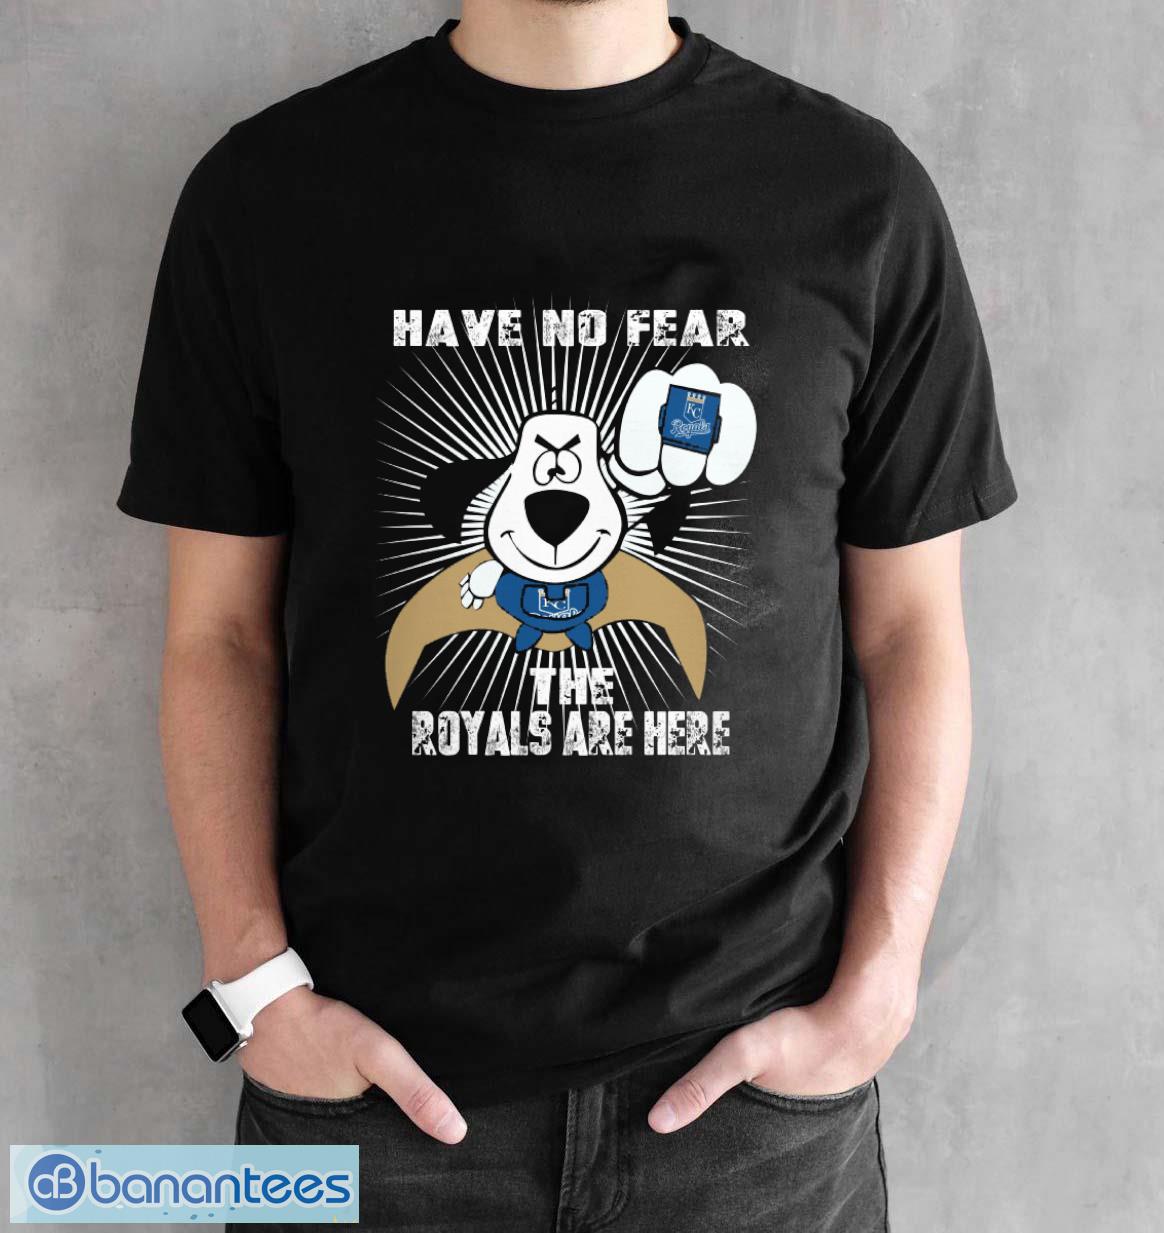 5 Nice XL Kansas City Royals Tops 4 T-Shirts 1 Jersey - clothing